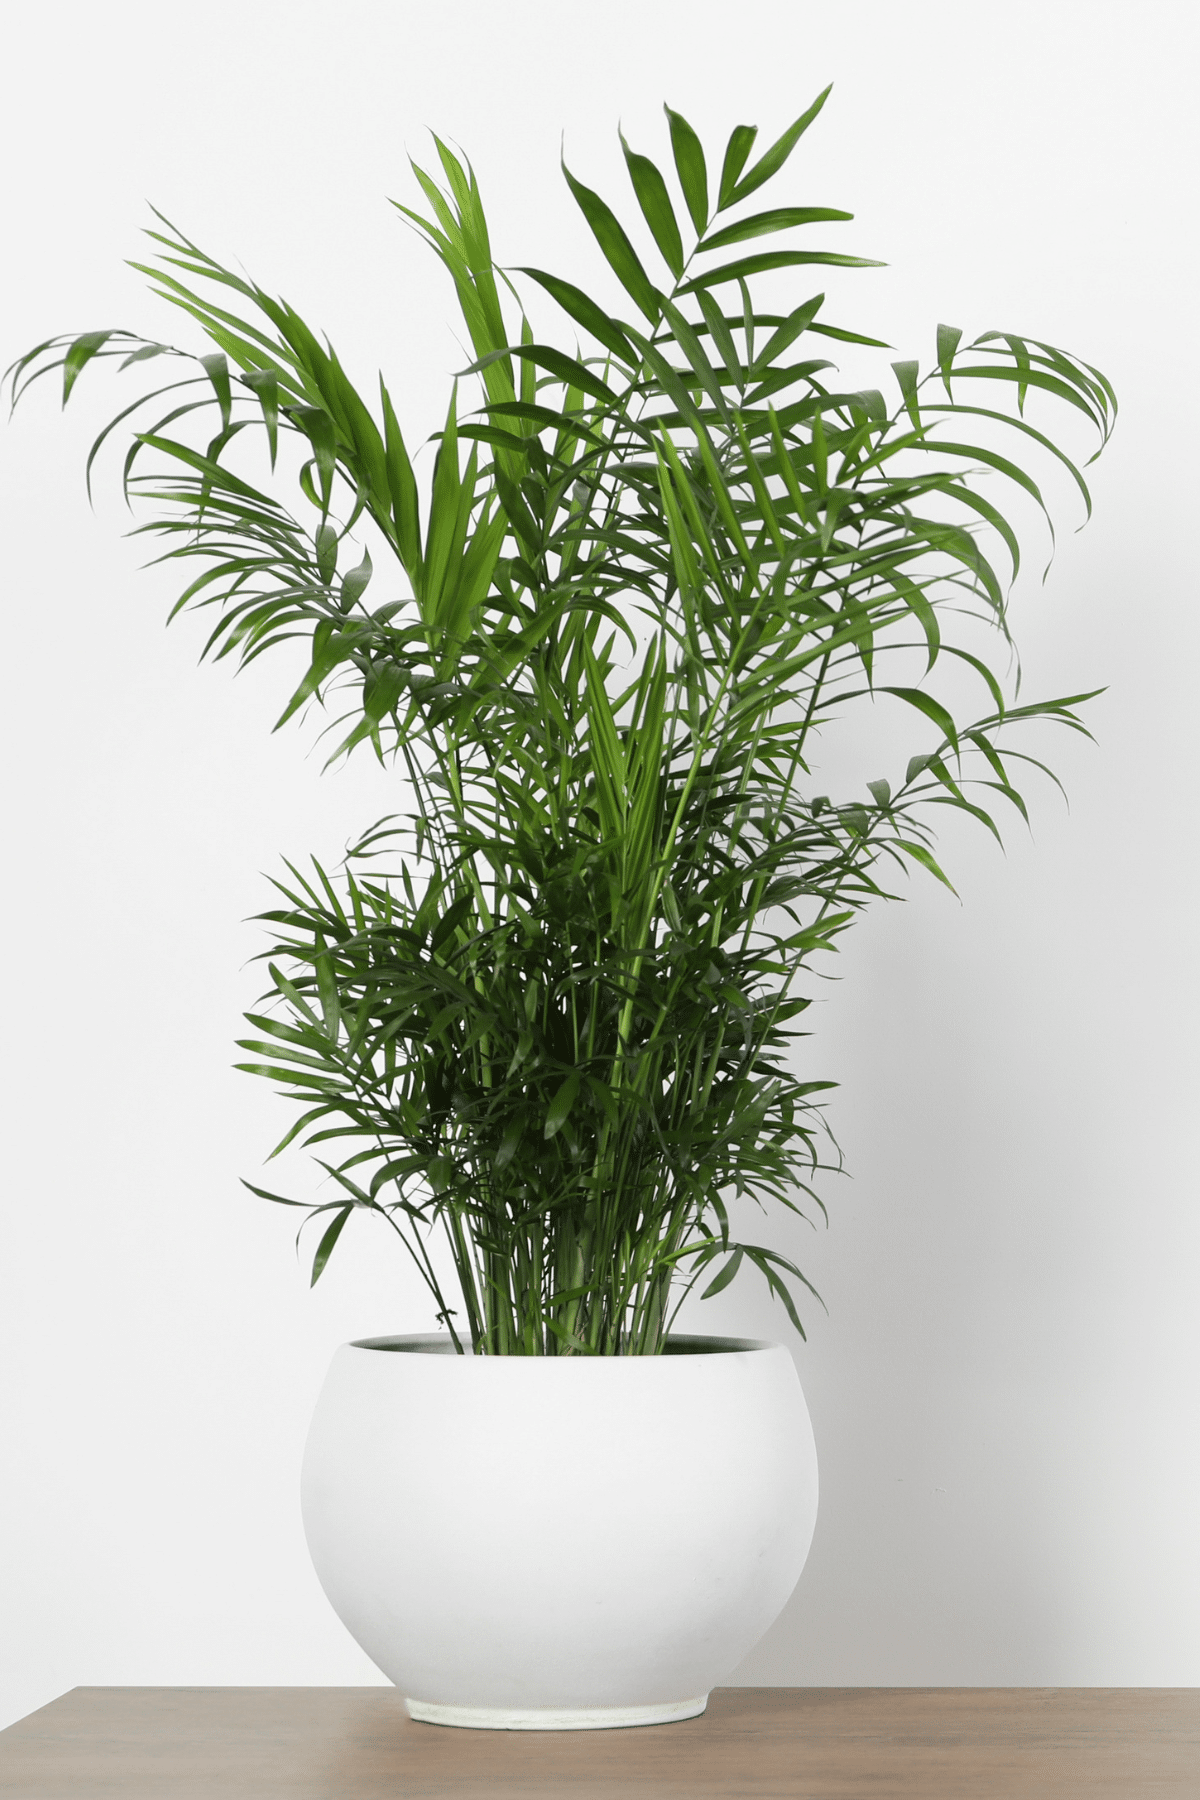 Parlor Palm (Chamaedorea elegans) in a white pot.